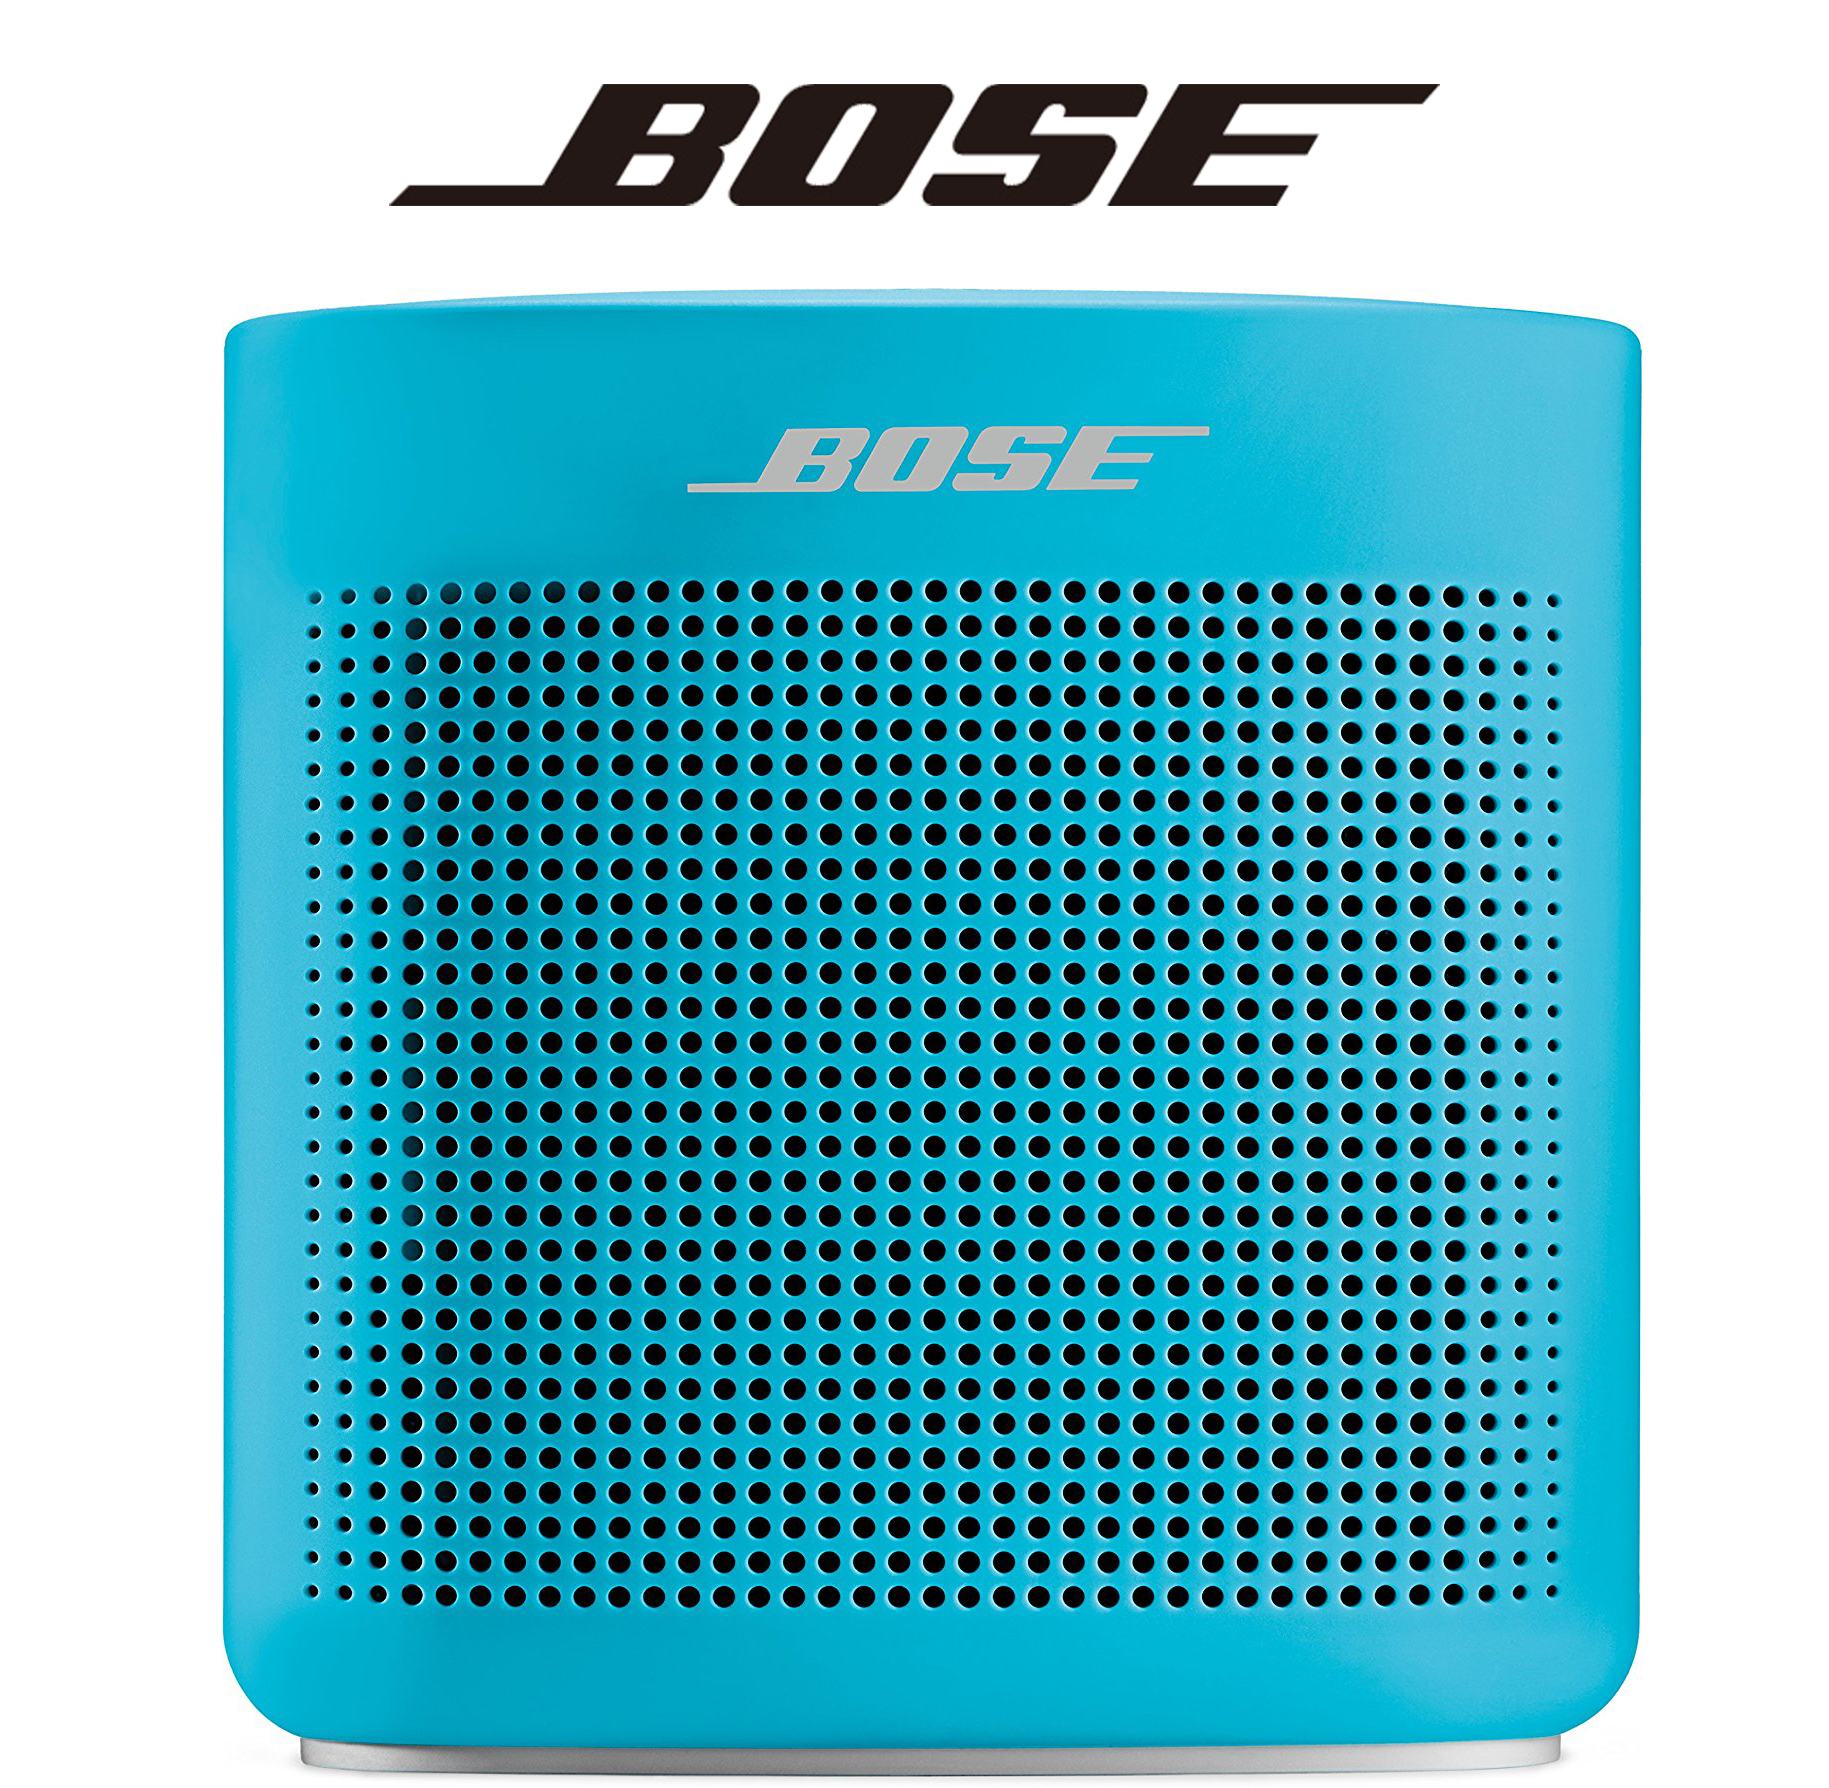 【Bose】ワイヤレス スピーカー マイク付 BL